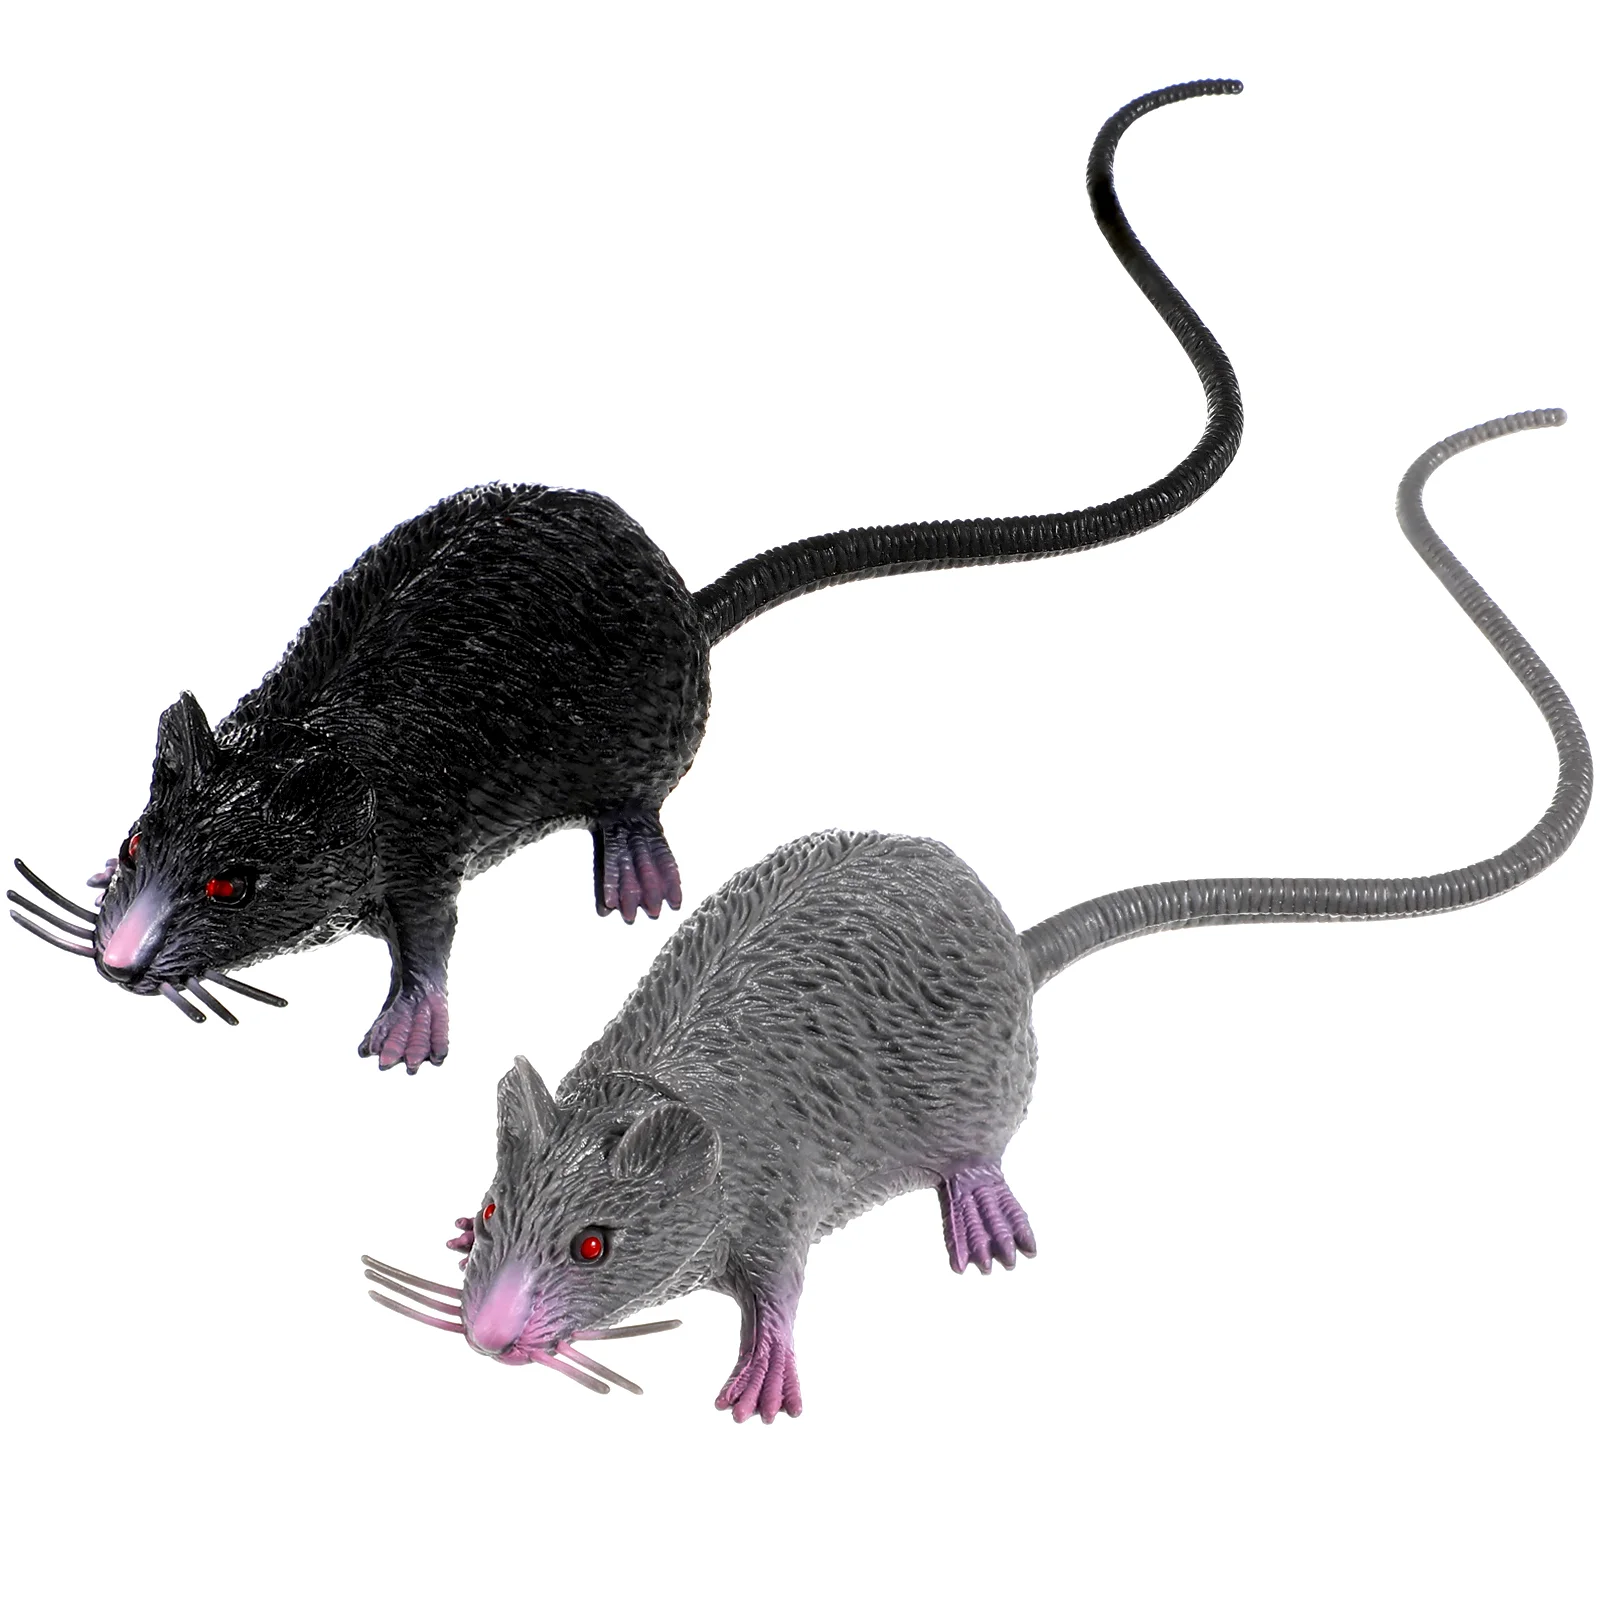 

2 Pcs Realistic Mice Toys Lifelike Mice Creepy Toys Spooky Fake Rat Figures Tricks Pranks Props Weird stuff